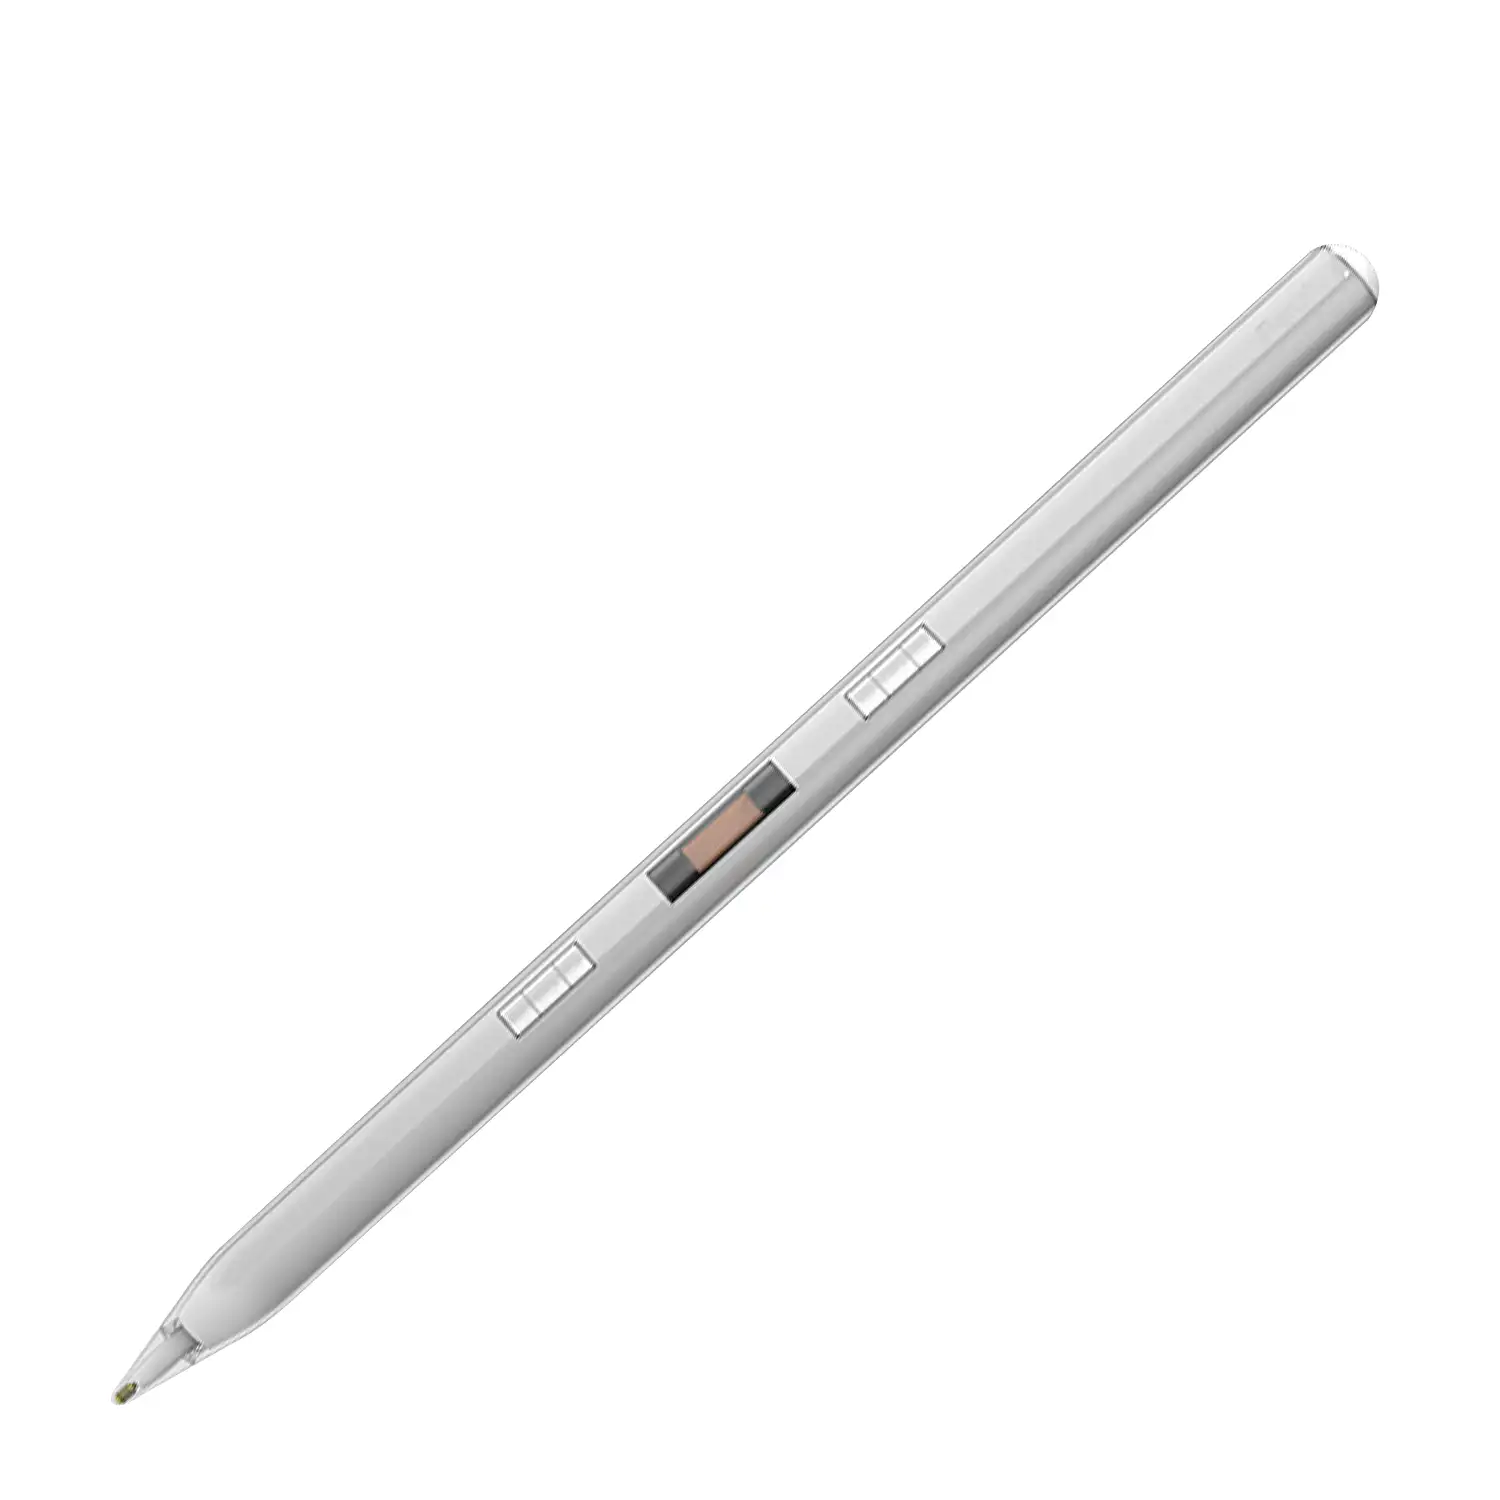 Pencil Pen P10S magnético con puntas reemplazables. Inclinable, núcleo de cobre con superconducción. Carcasa transparente.